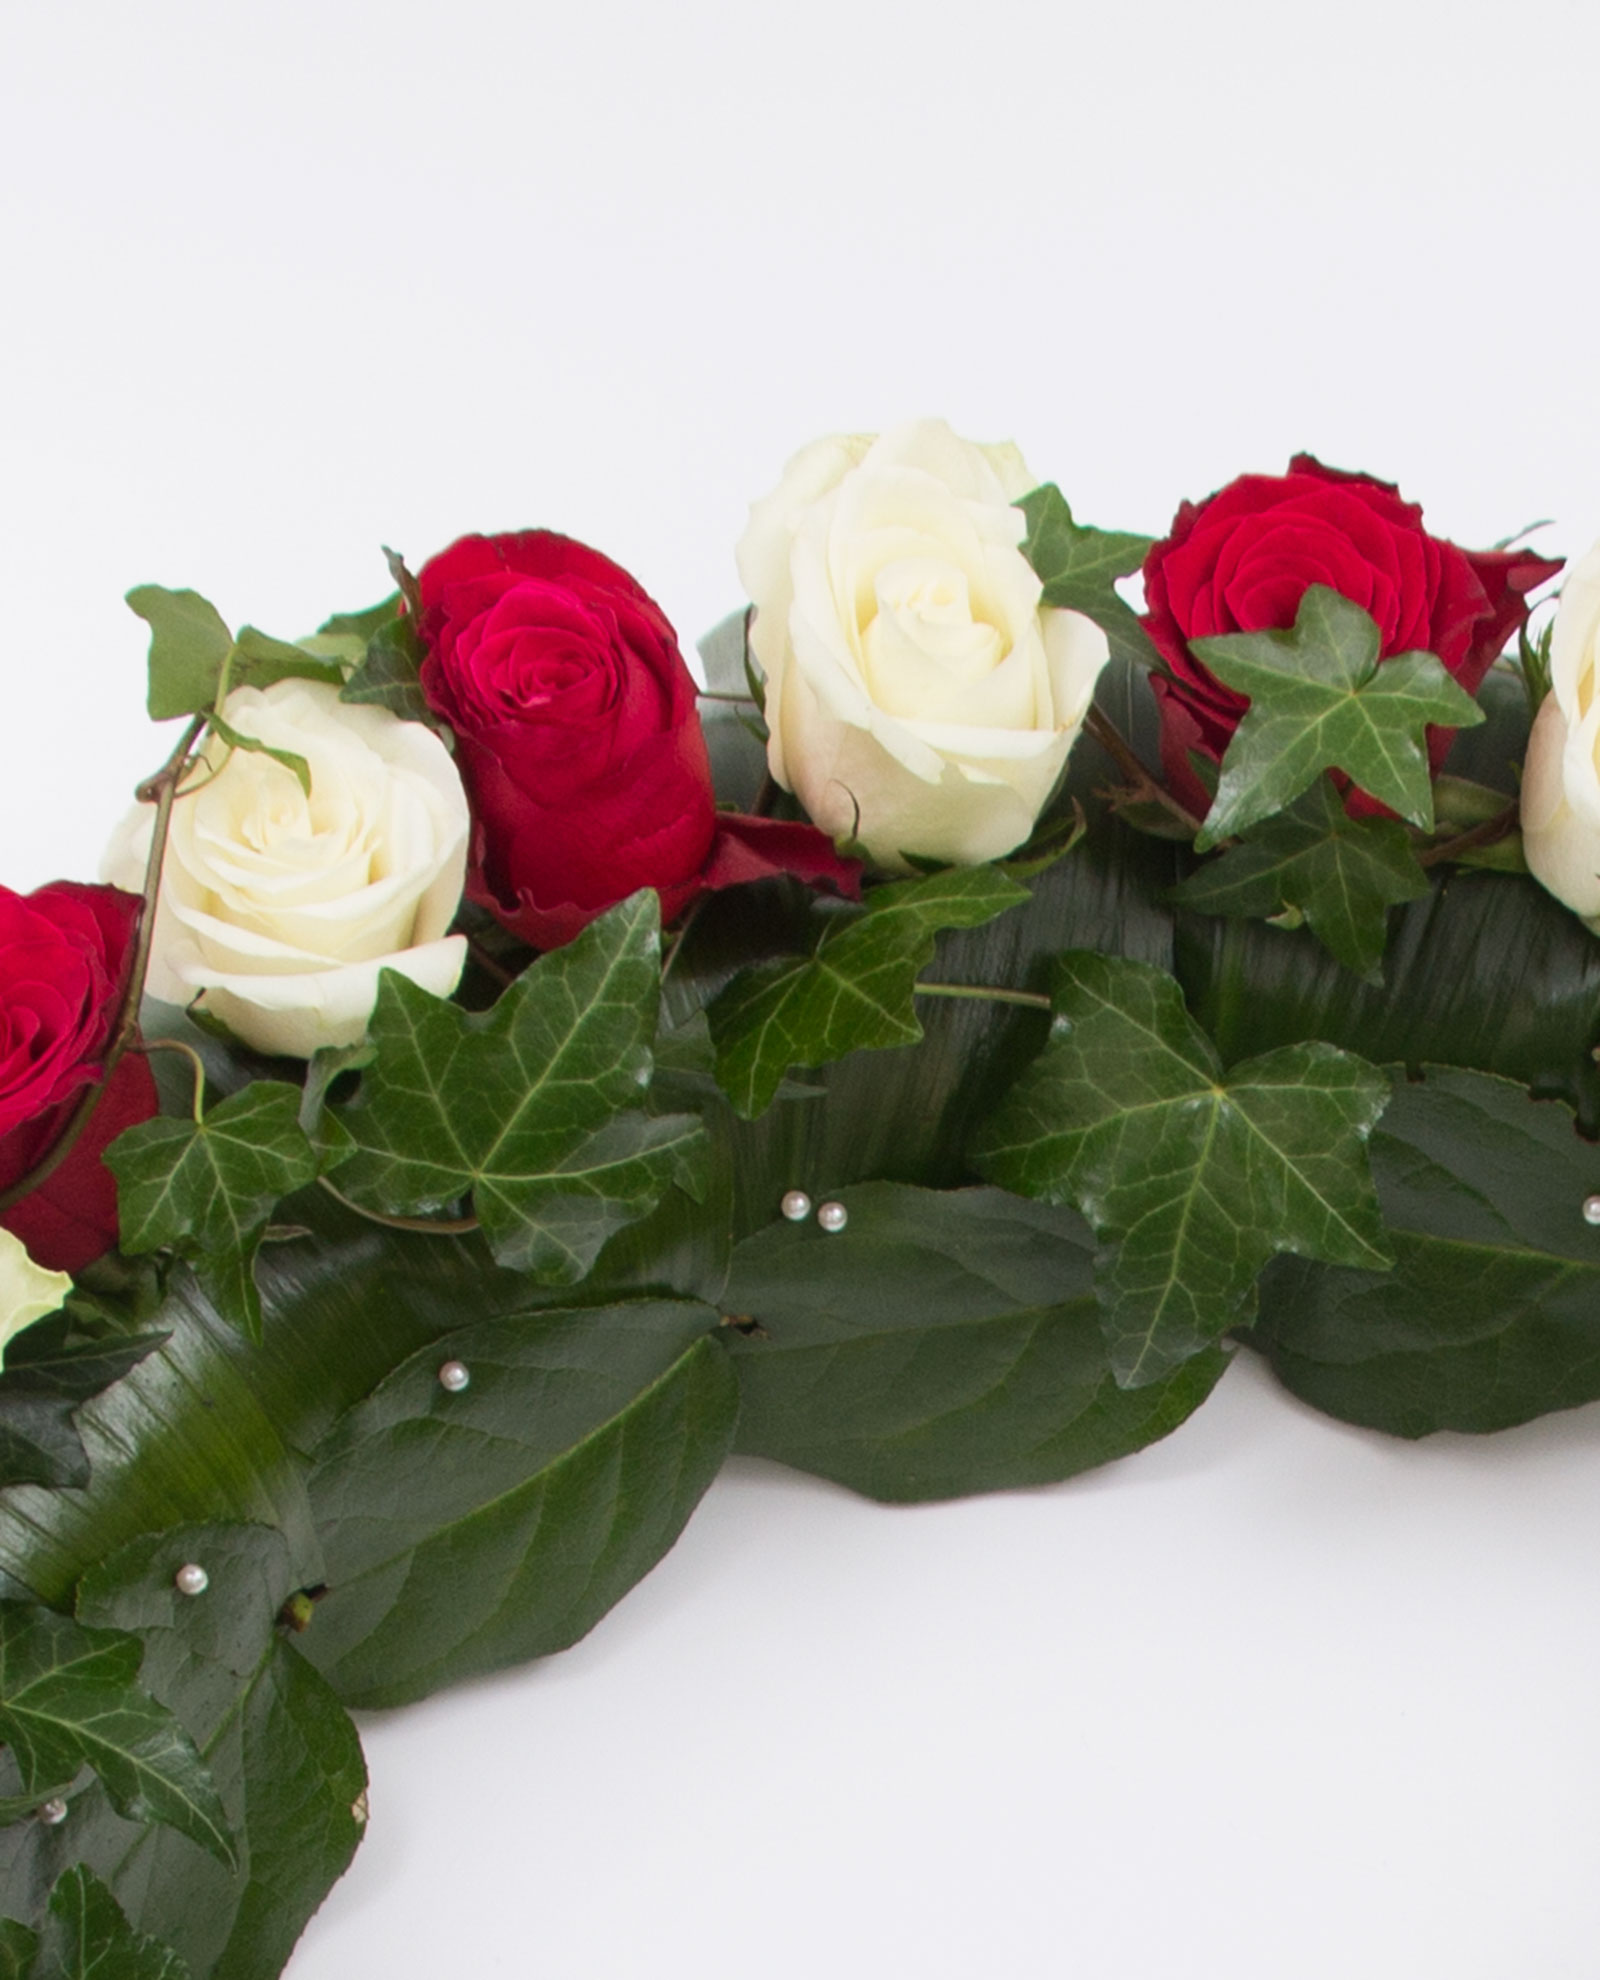 Coroana funerara speciala trandafiri si anthurium